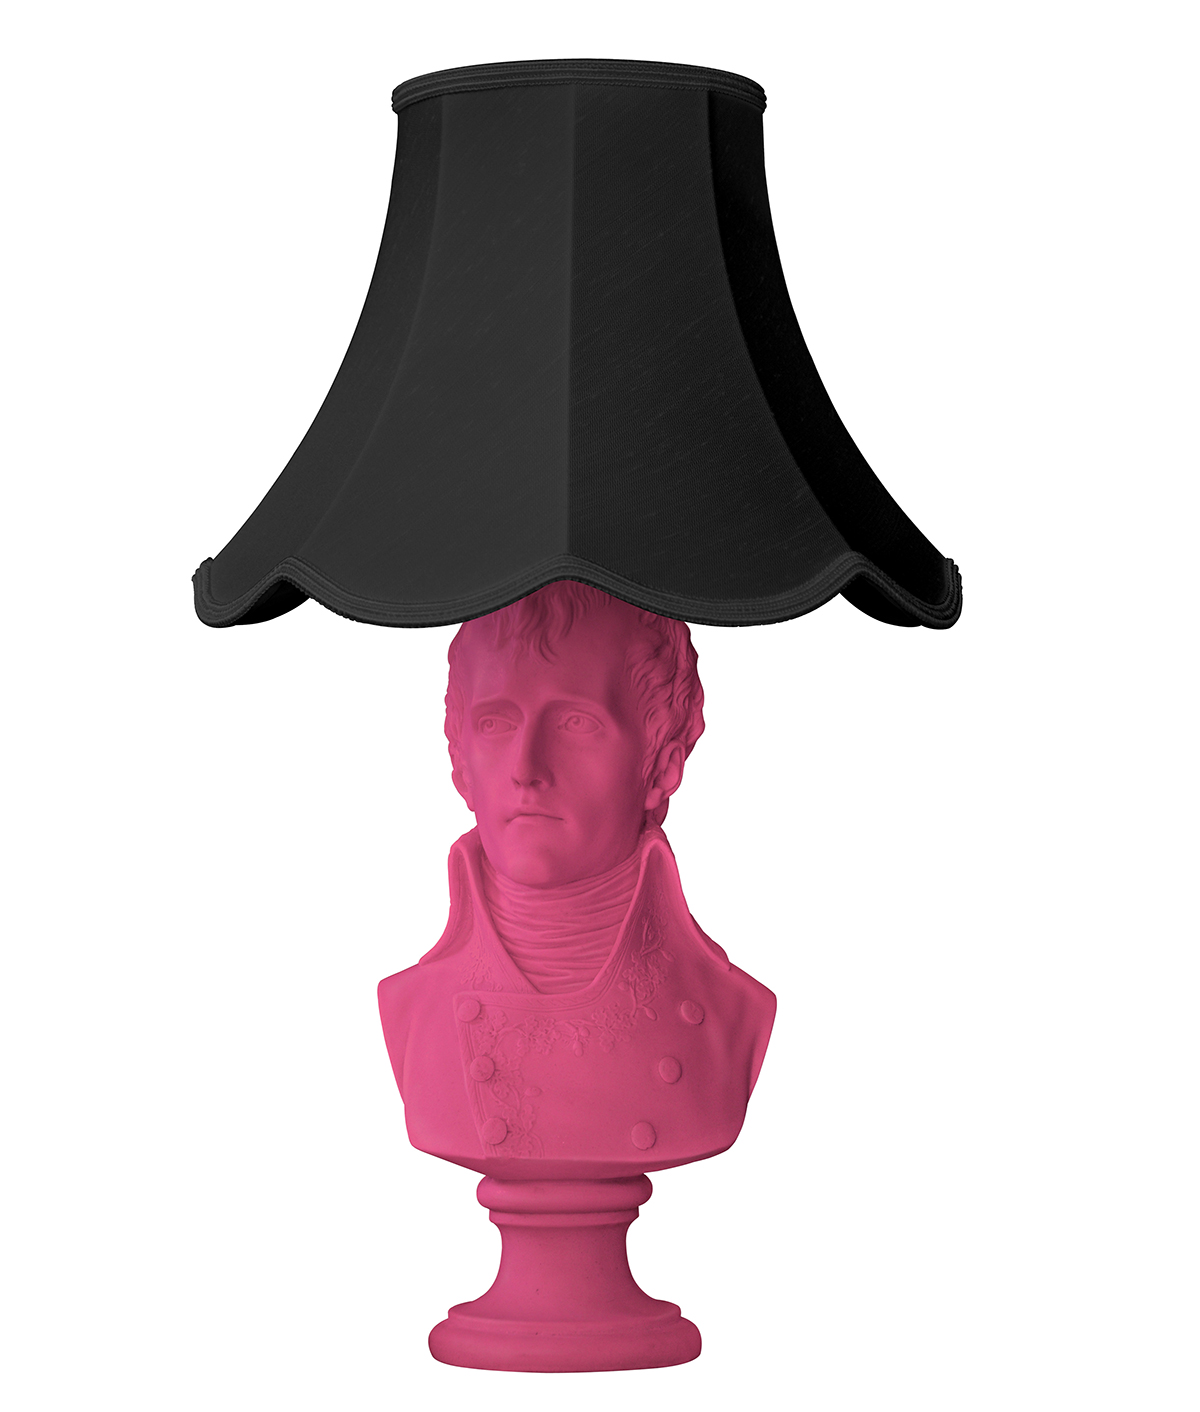 squarerooms-pink-decor-Mineheart-Waterloo-table-lamp